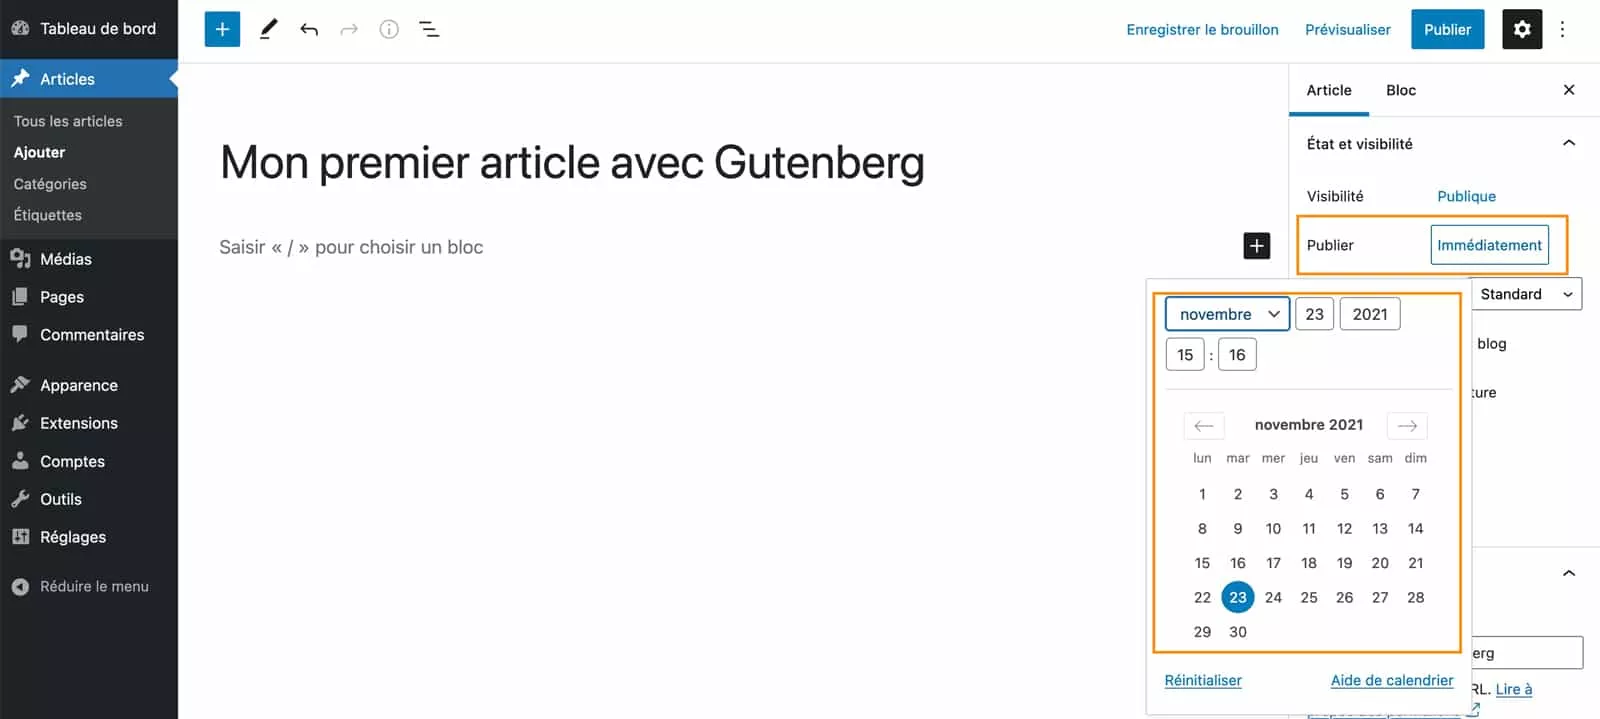 creer articles wordpress avec gutenberg 82 | Écrire des articles avec Gutenberg - Mode d'emploi